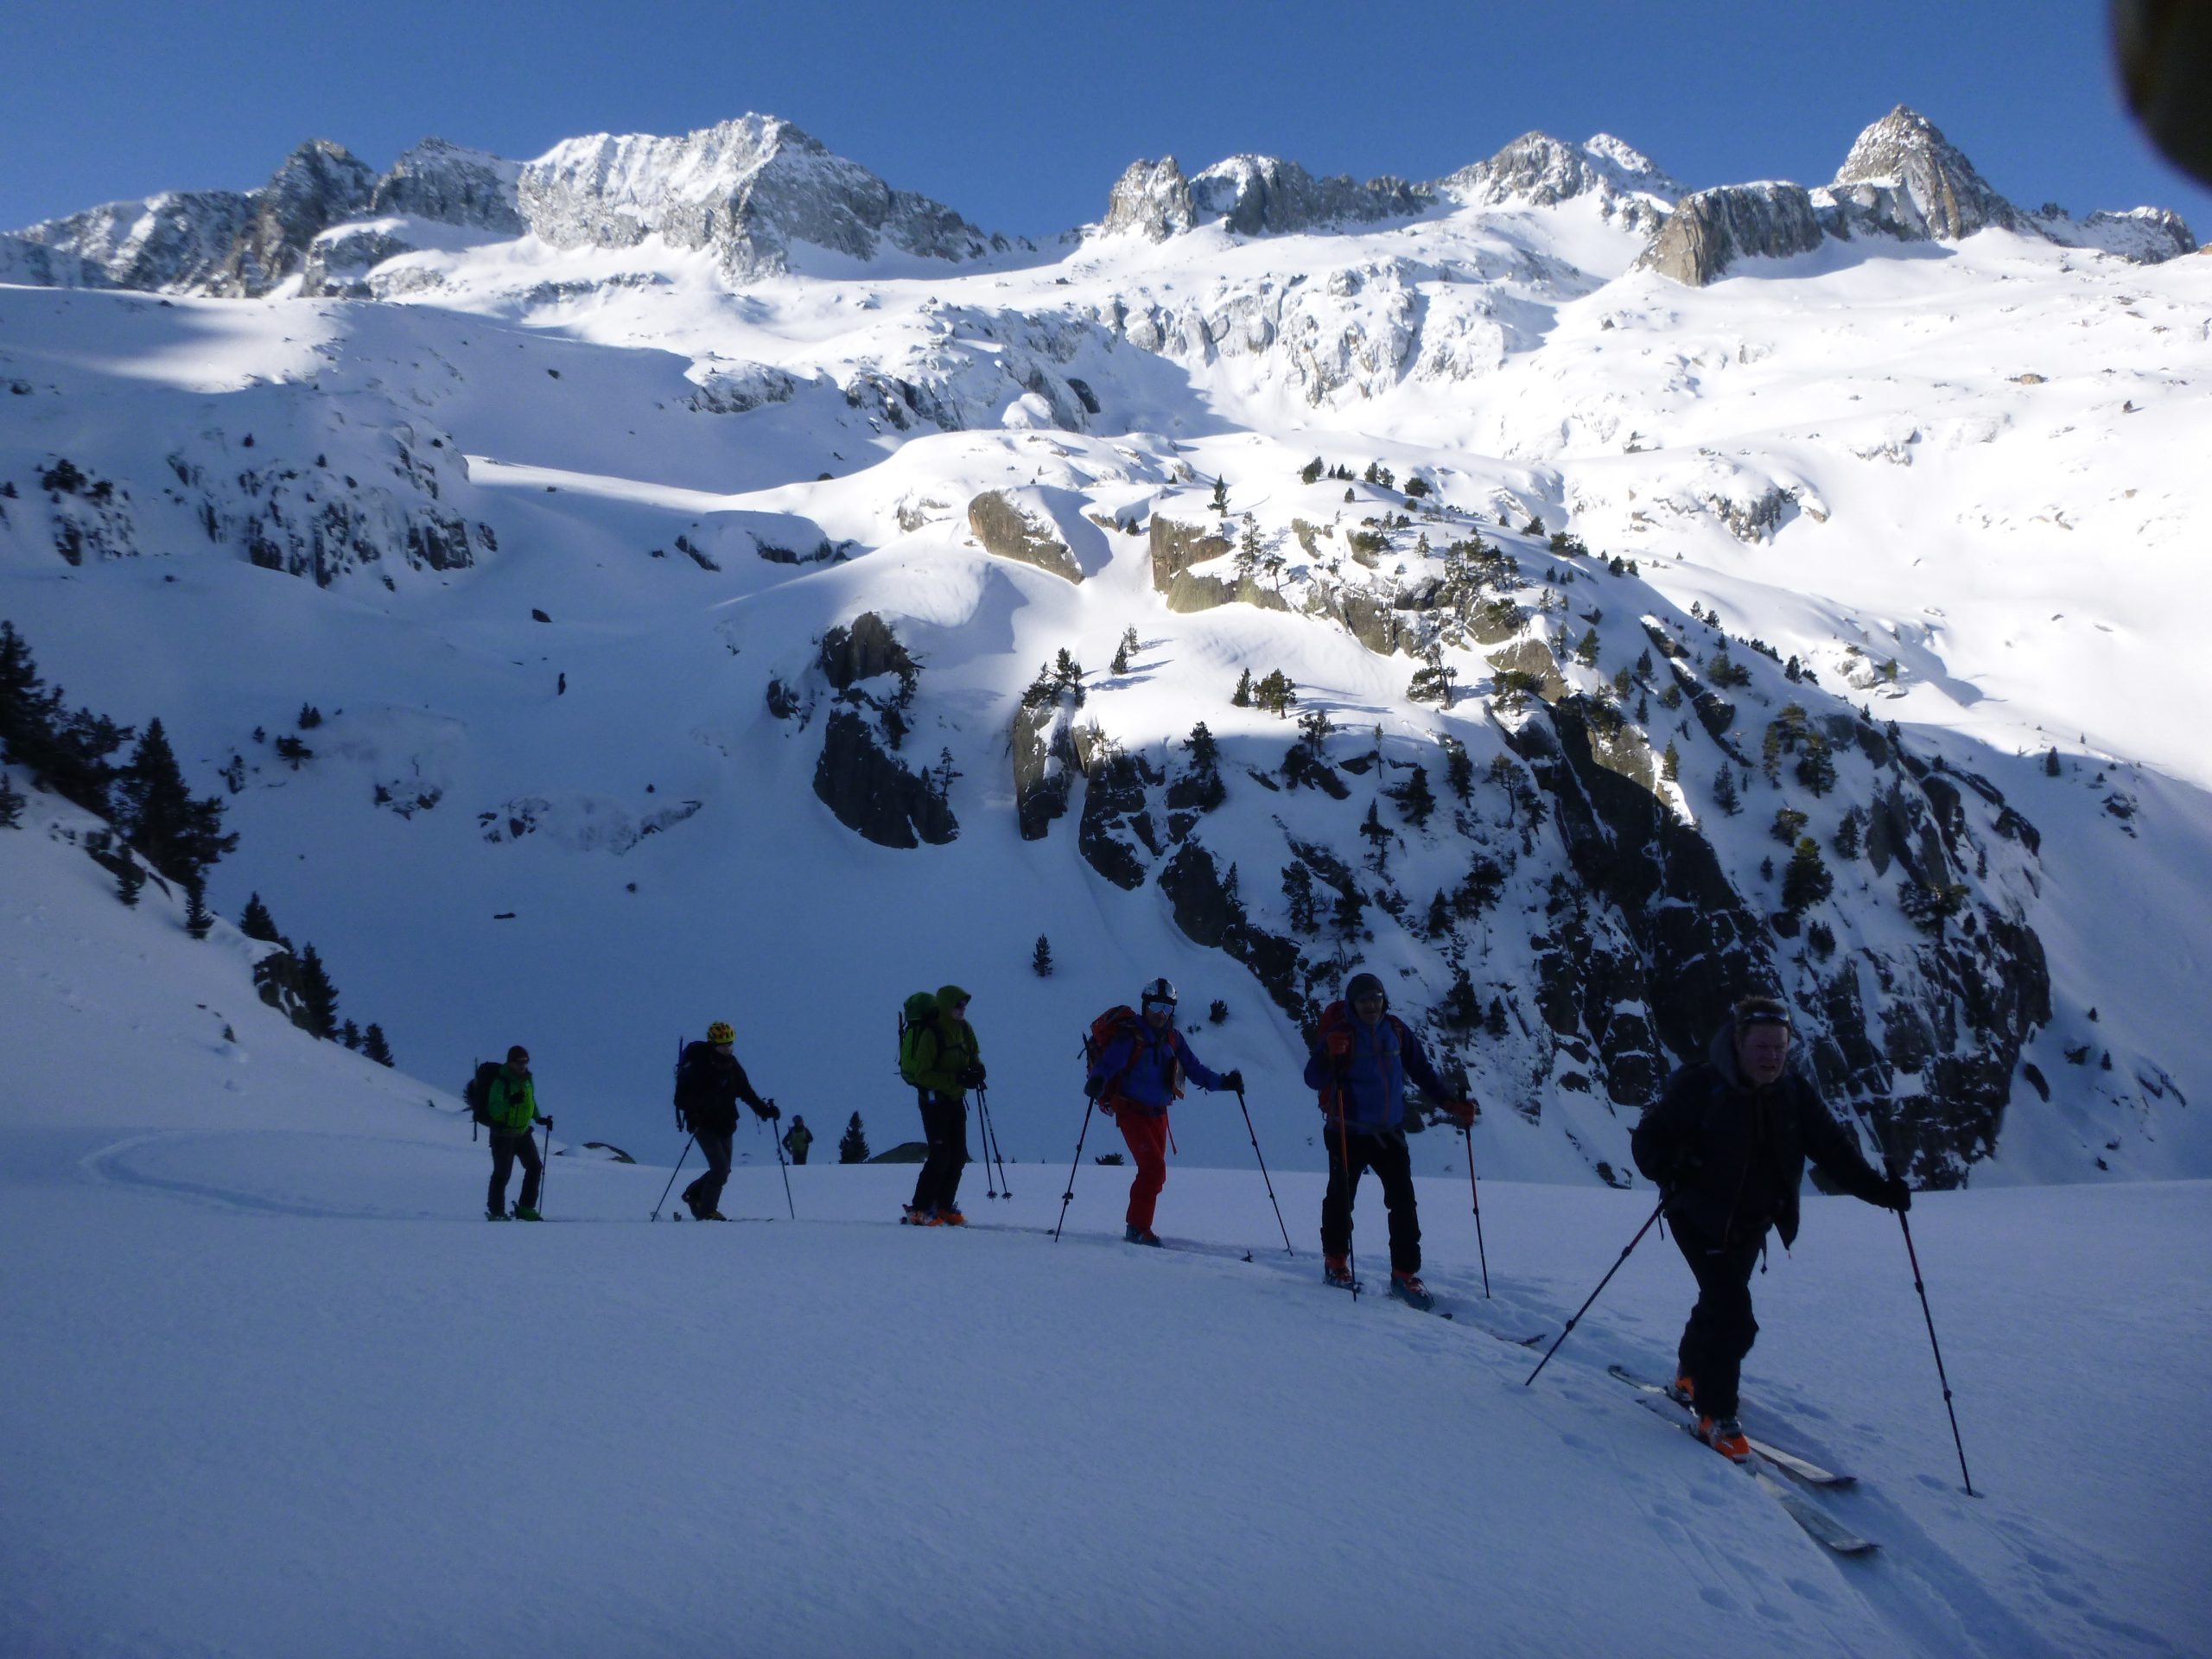 Curso de esquí de montaña en el Vall d´Aran. Nivel 1 (iniciación)-3 días